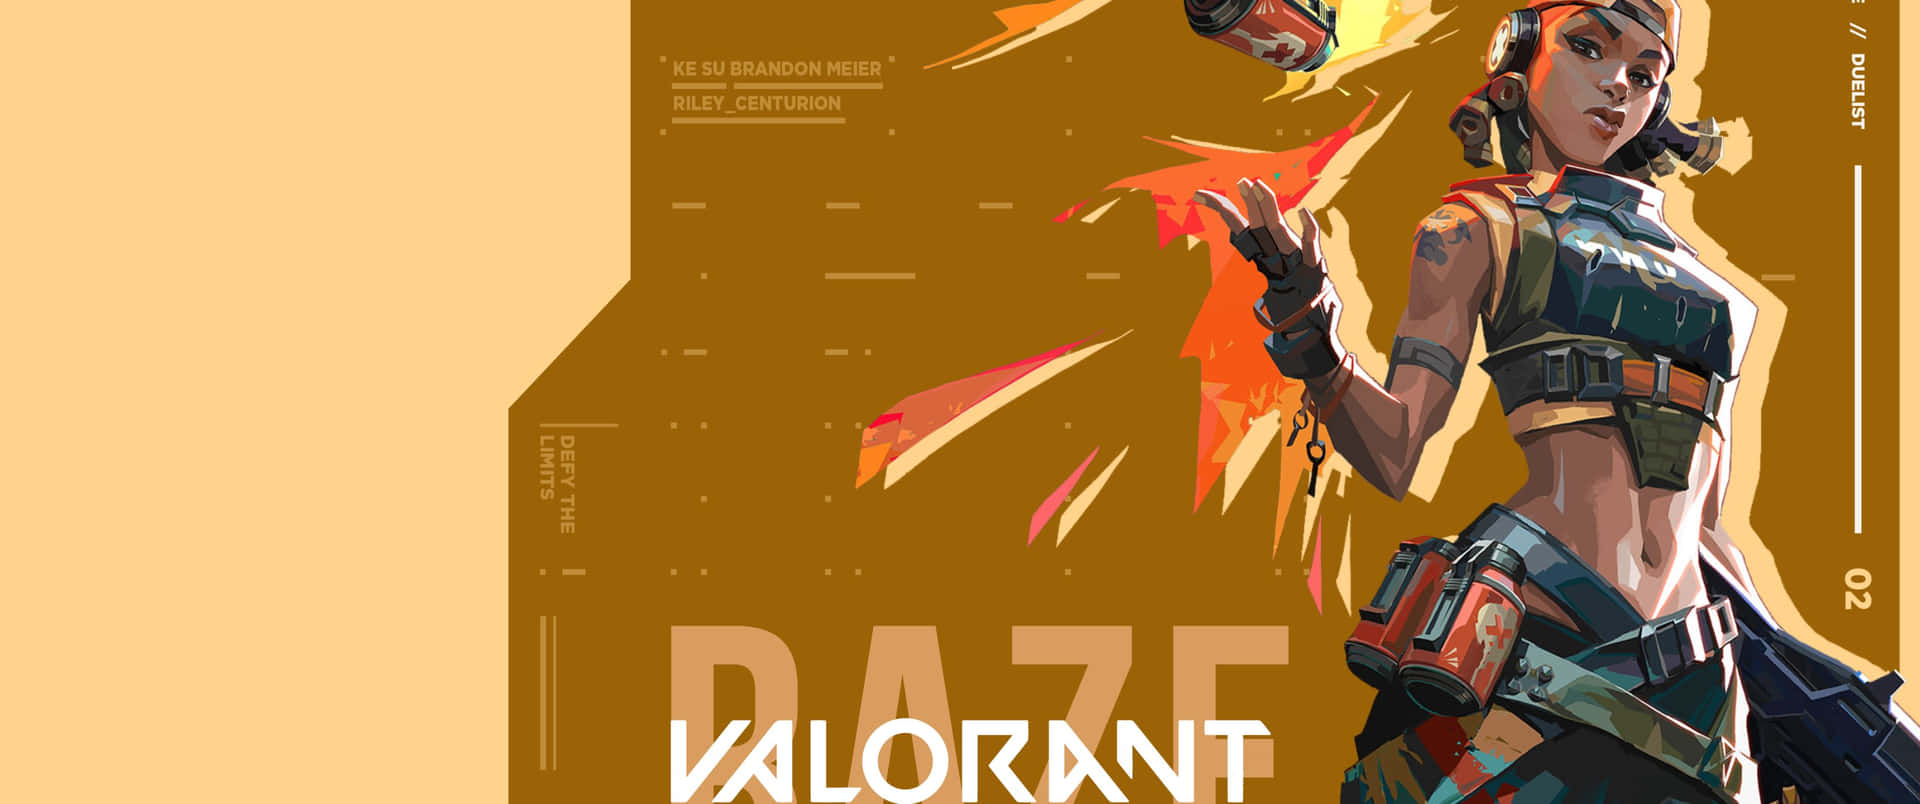 3440x1440p Valorant Raze Paint Shell Background